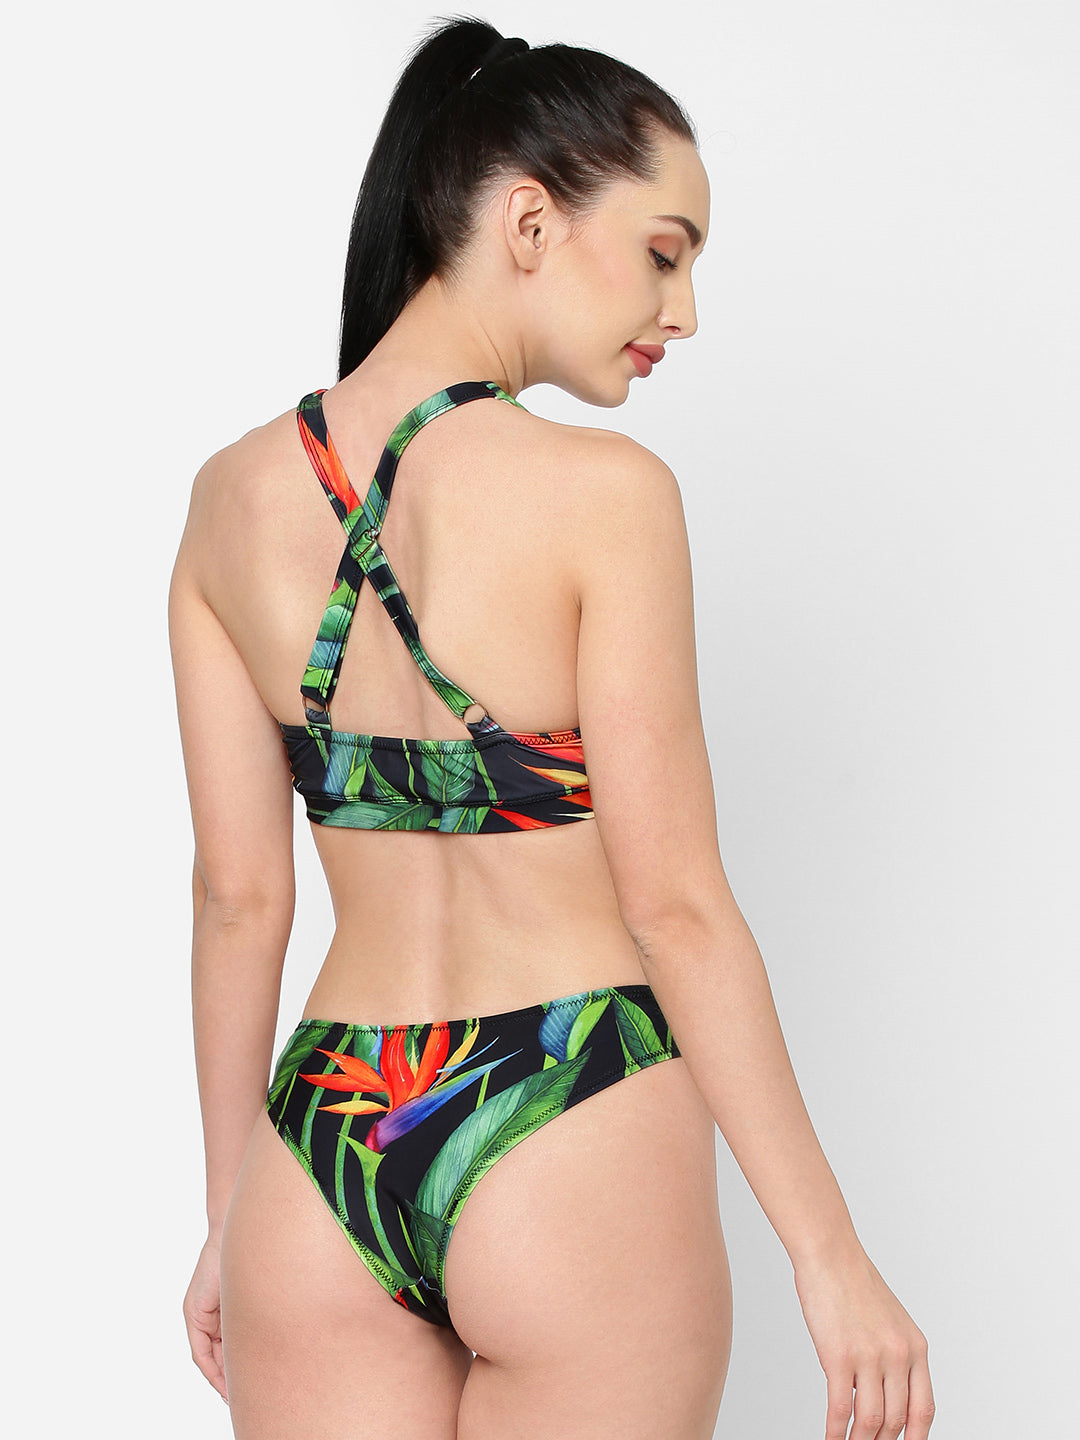 Esha Lal Swimwear two piece bikini set in a birds of paradise print